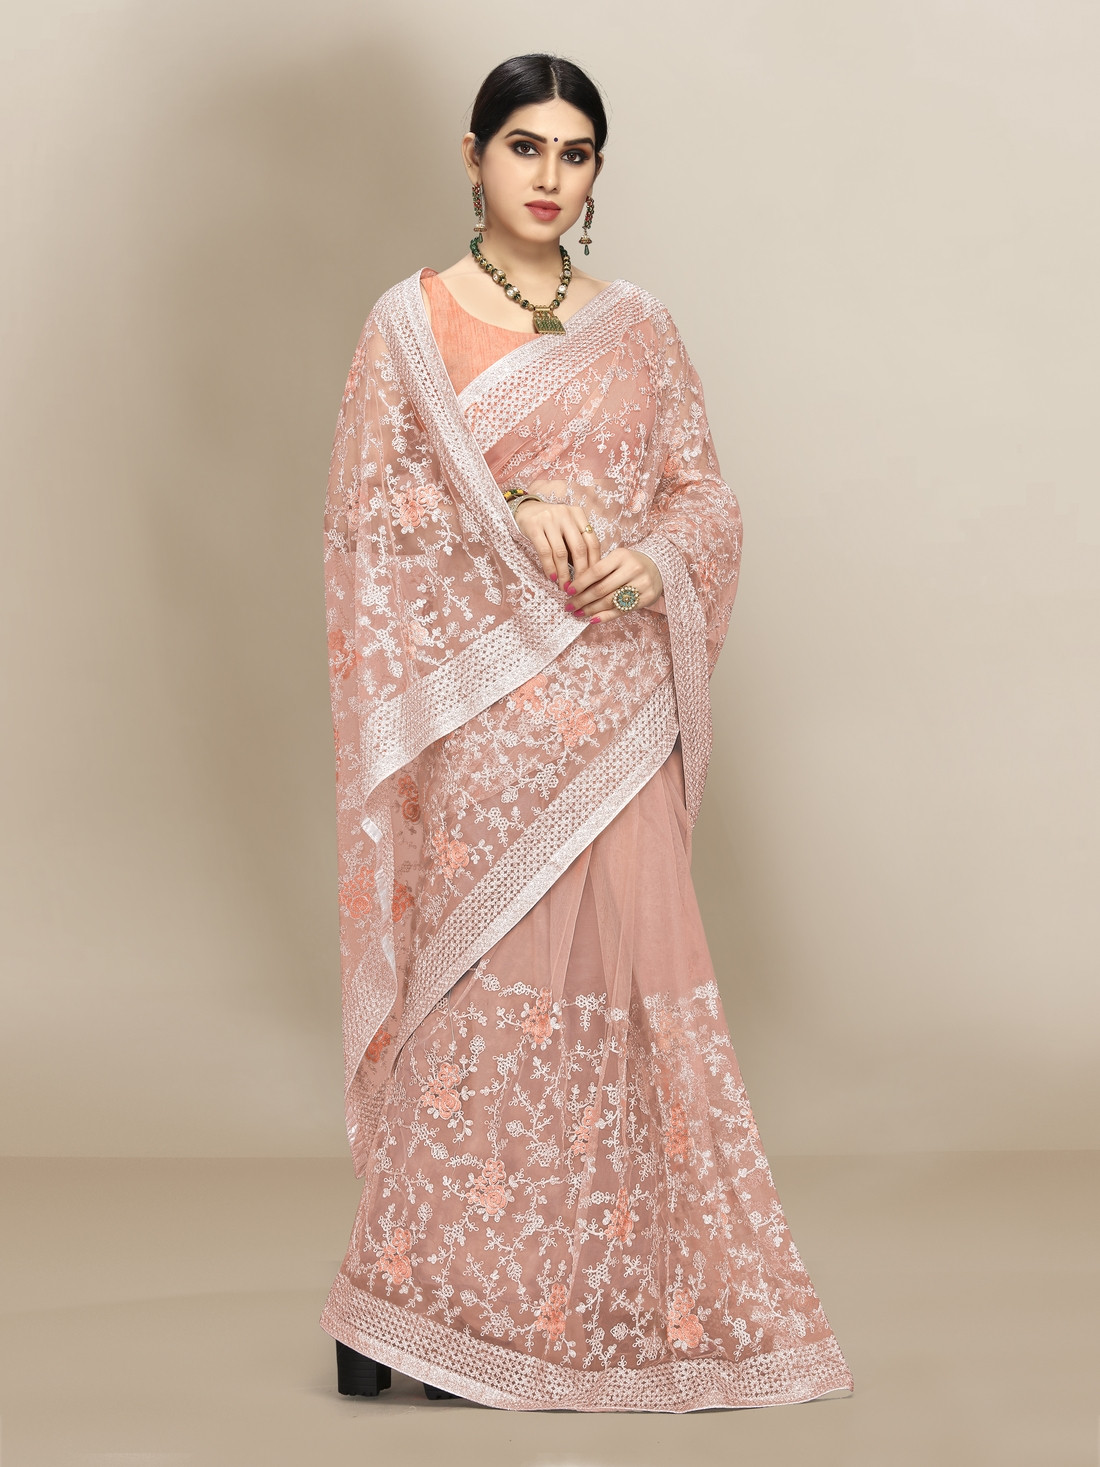 Super Net beautiful Designer Saree with extraordinary embroidery-Peach